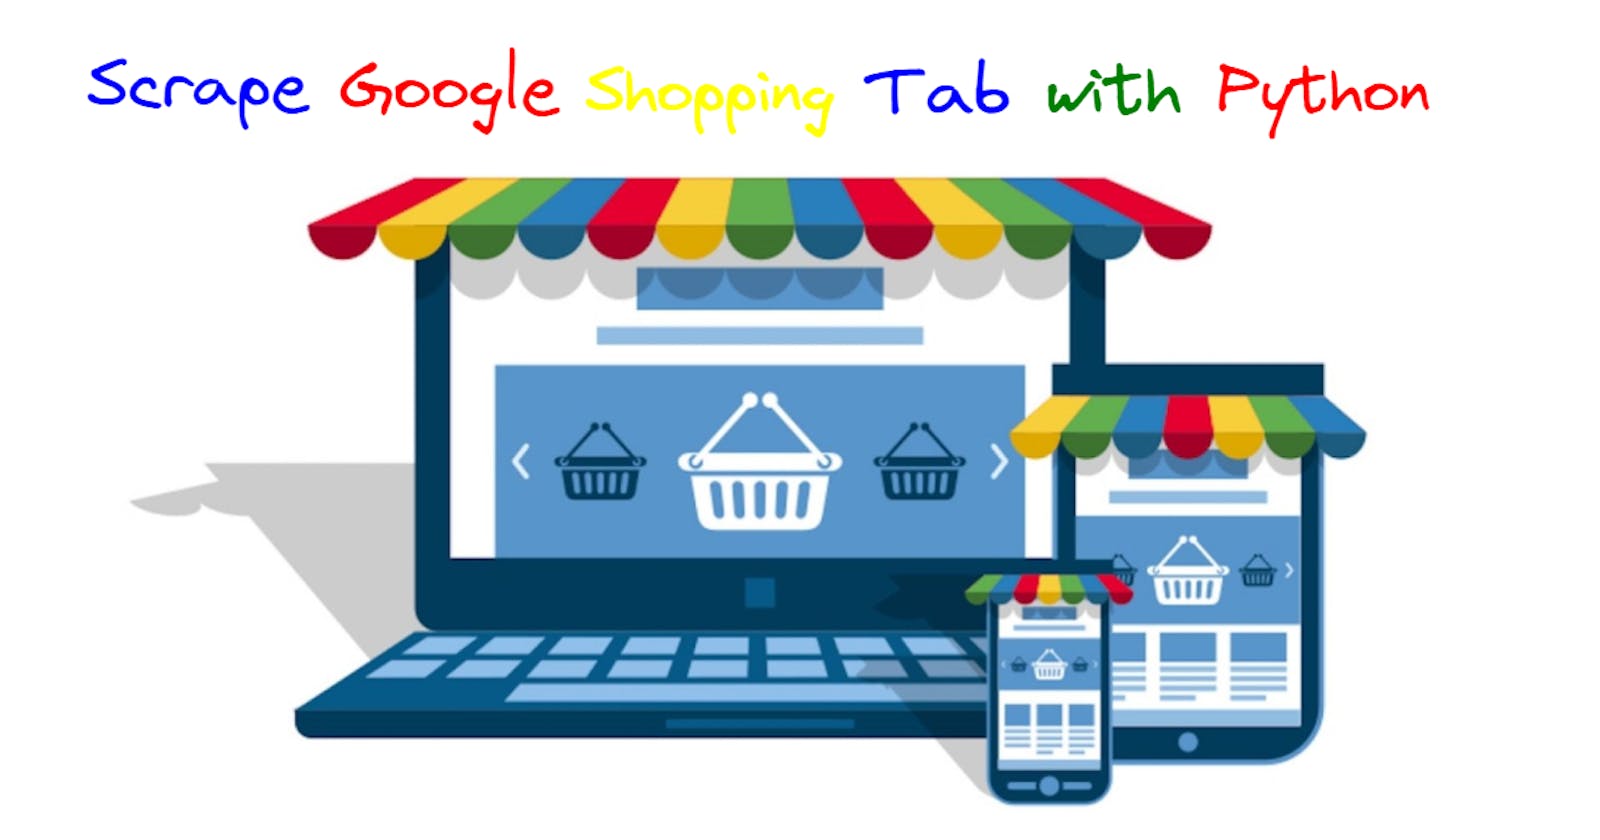 Scrape Google Shopping Tab with Python